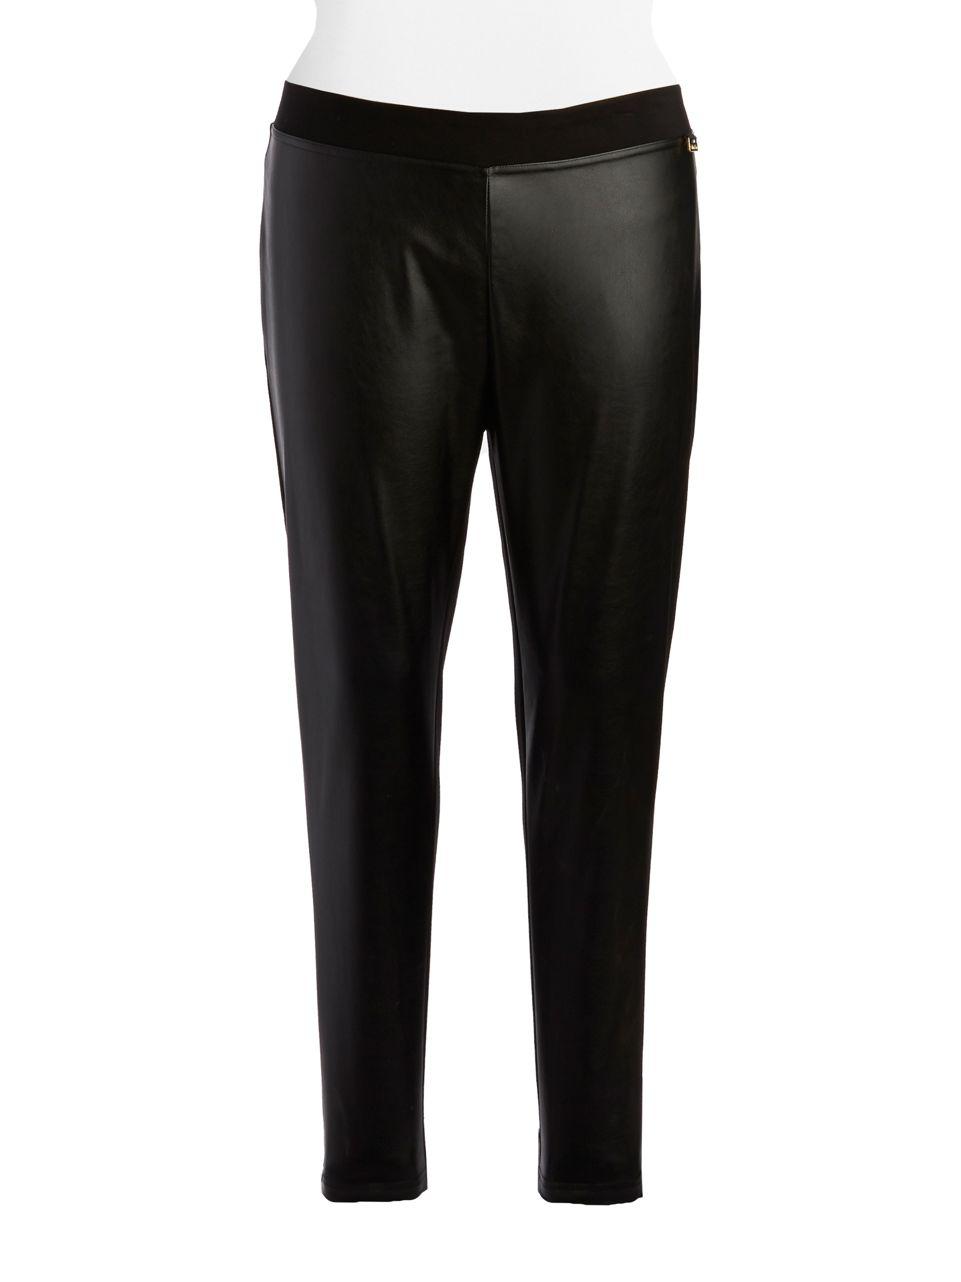 Calvin Klein Plus Faux Leather Ponte Pants in Black - Lyst